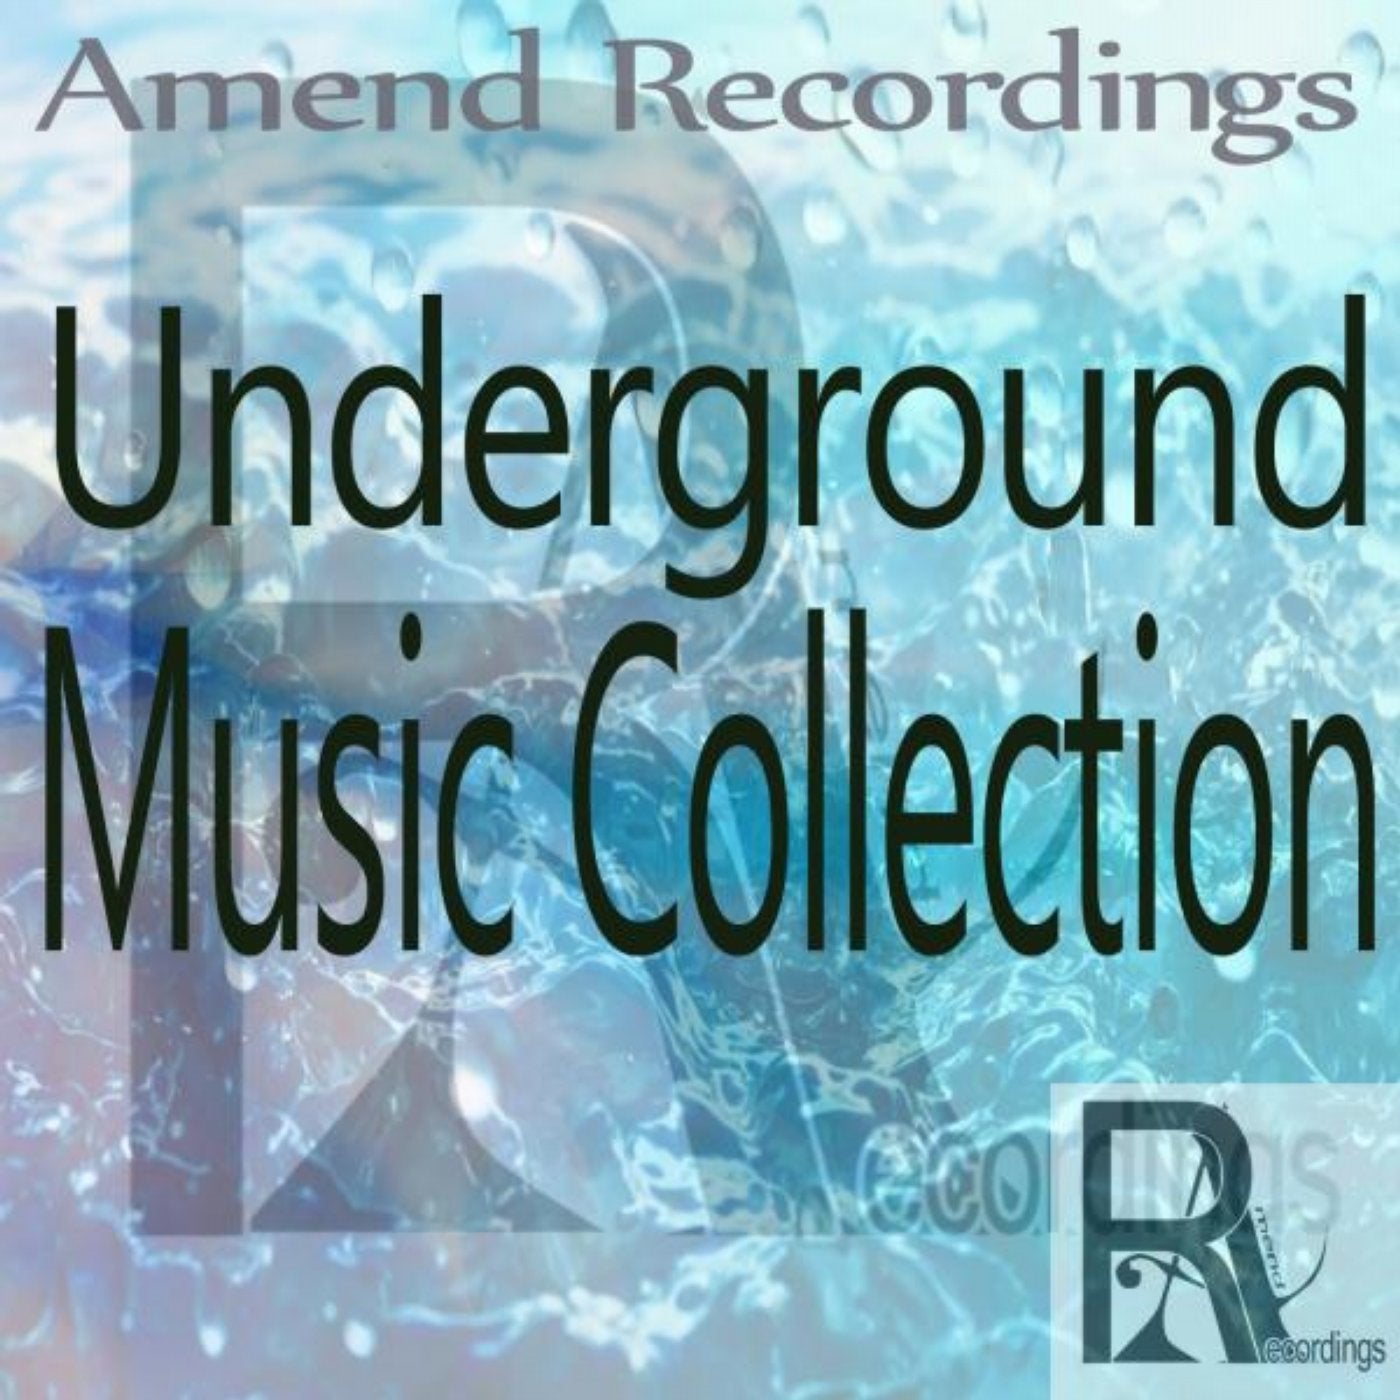 Undeground Music Collection